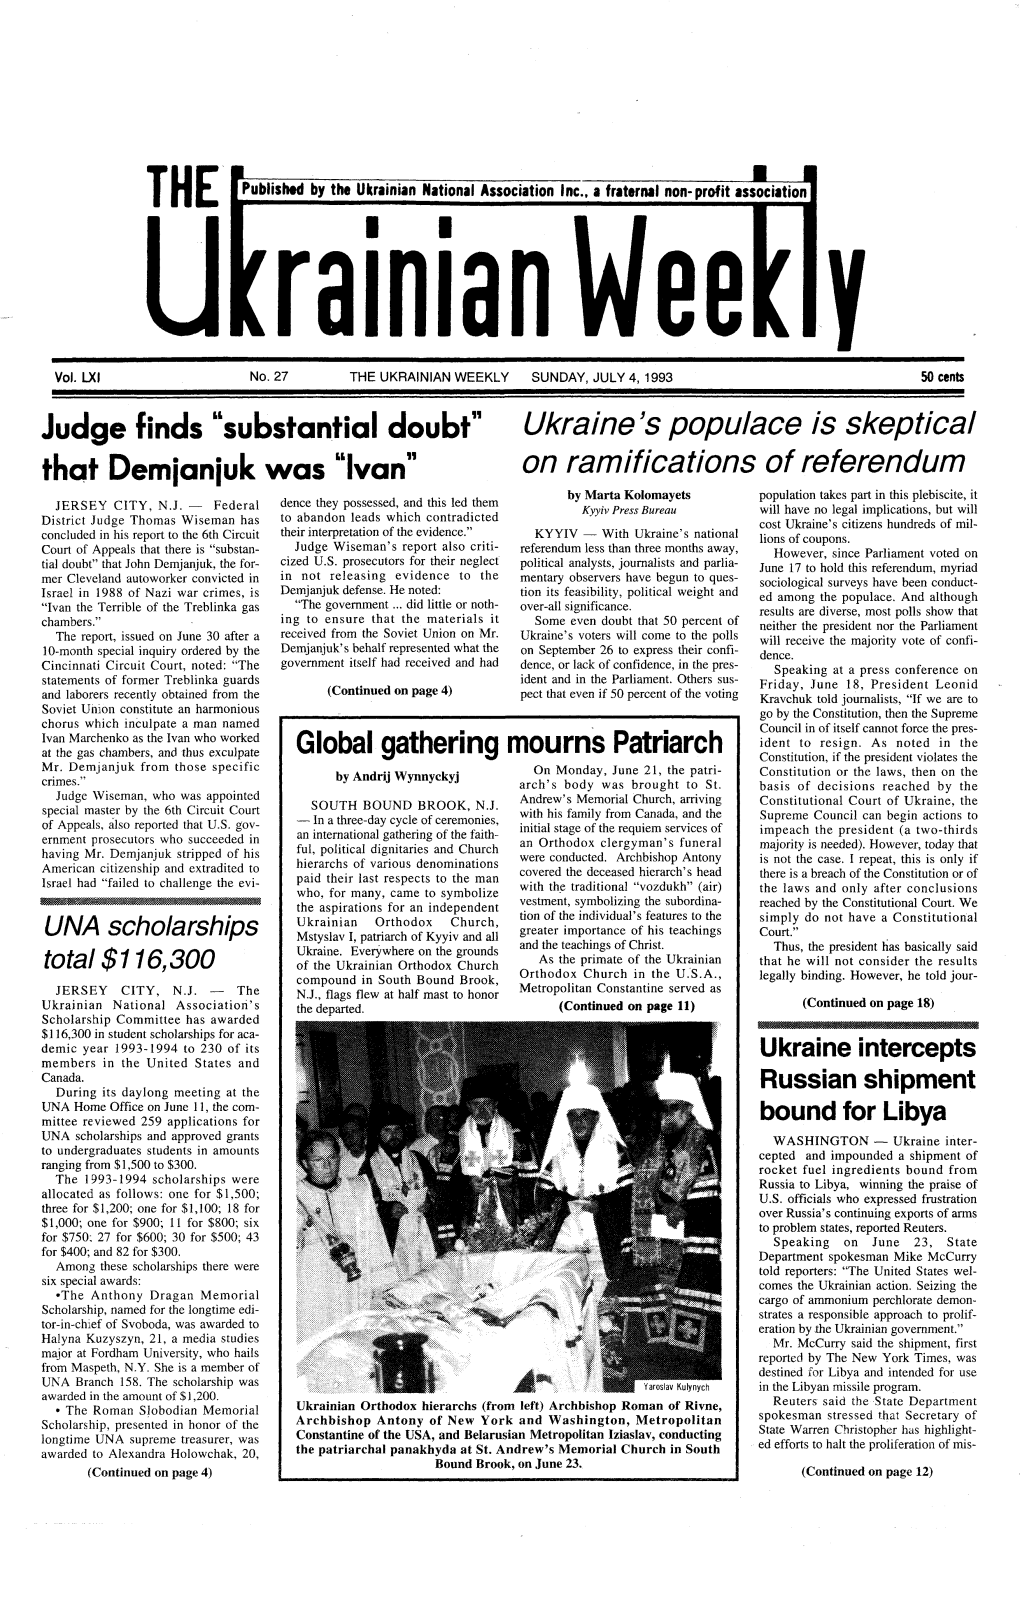 The Ukrainian Weekly 1993, No.27